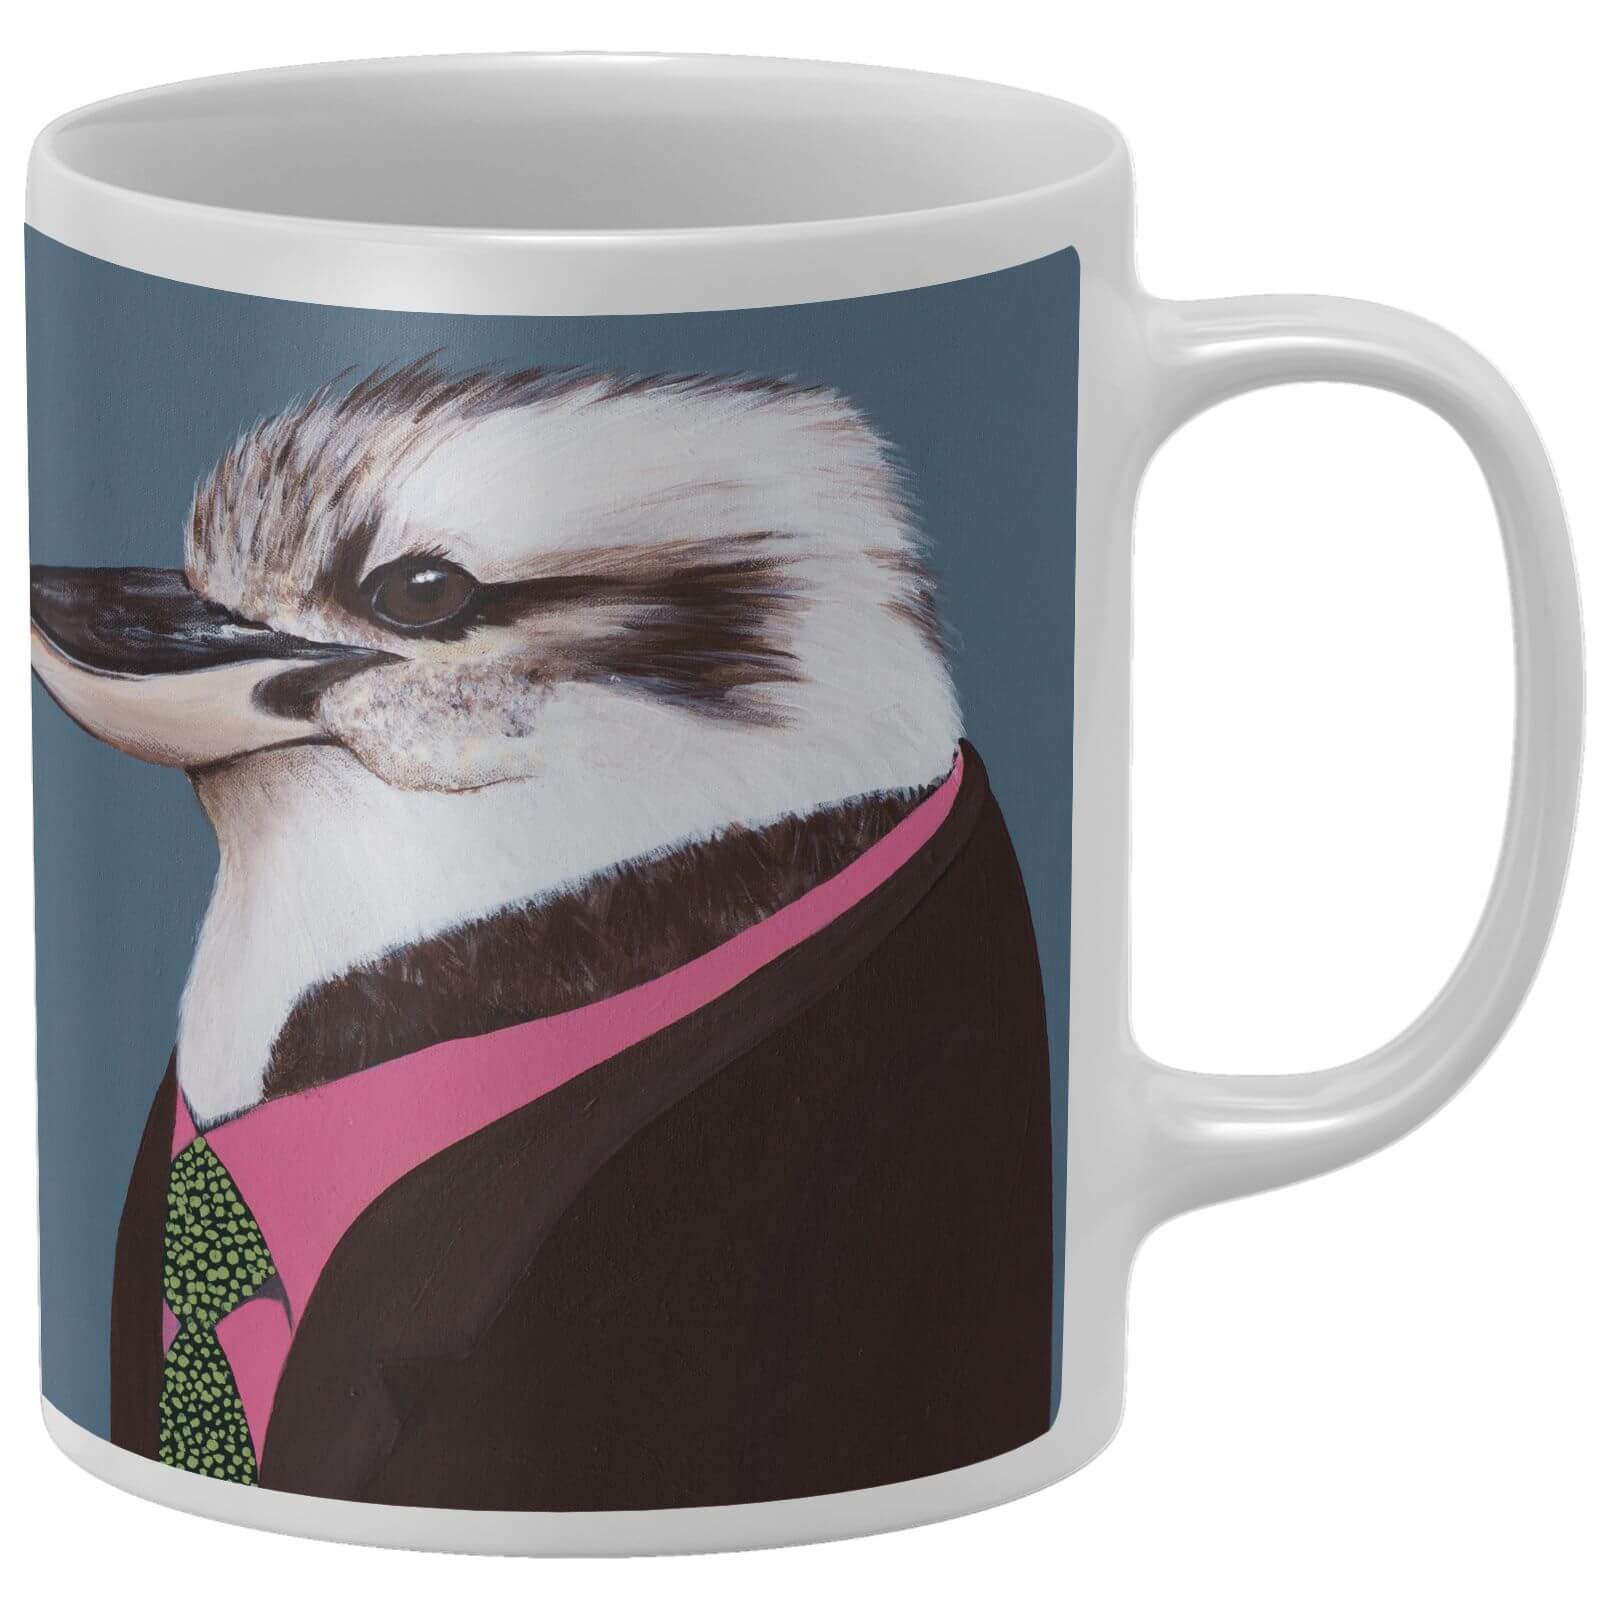 Kookaburra In Suit Mug